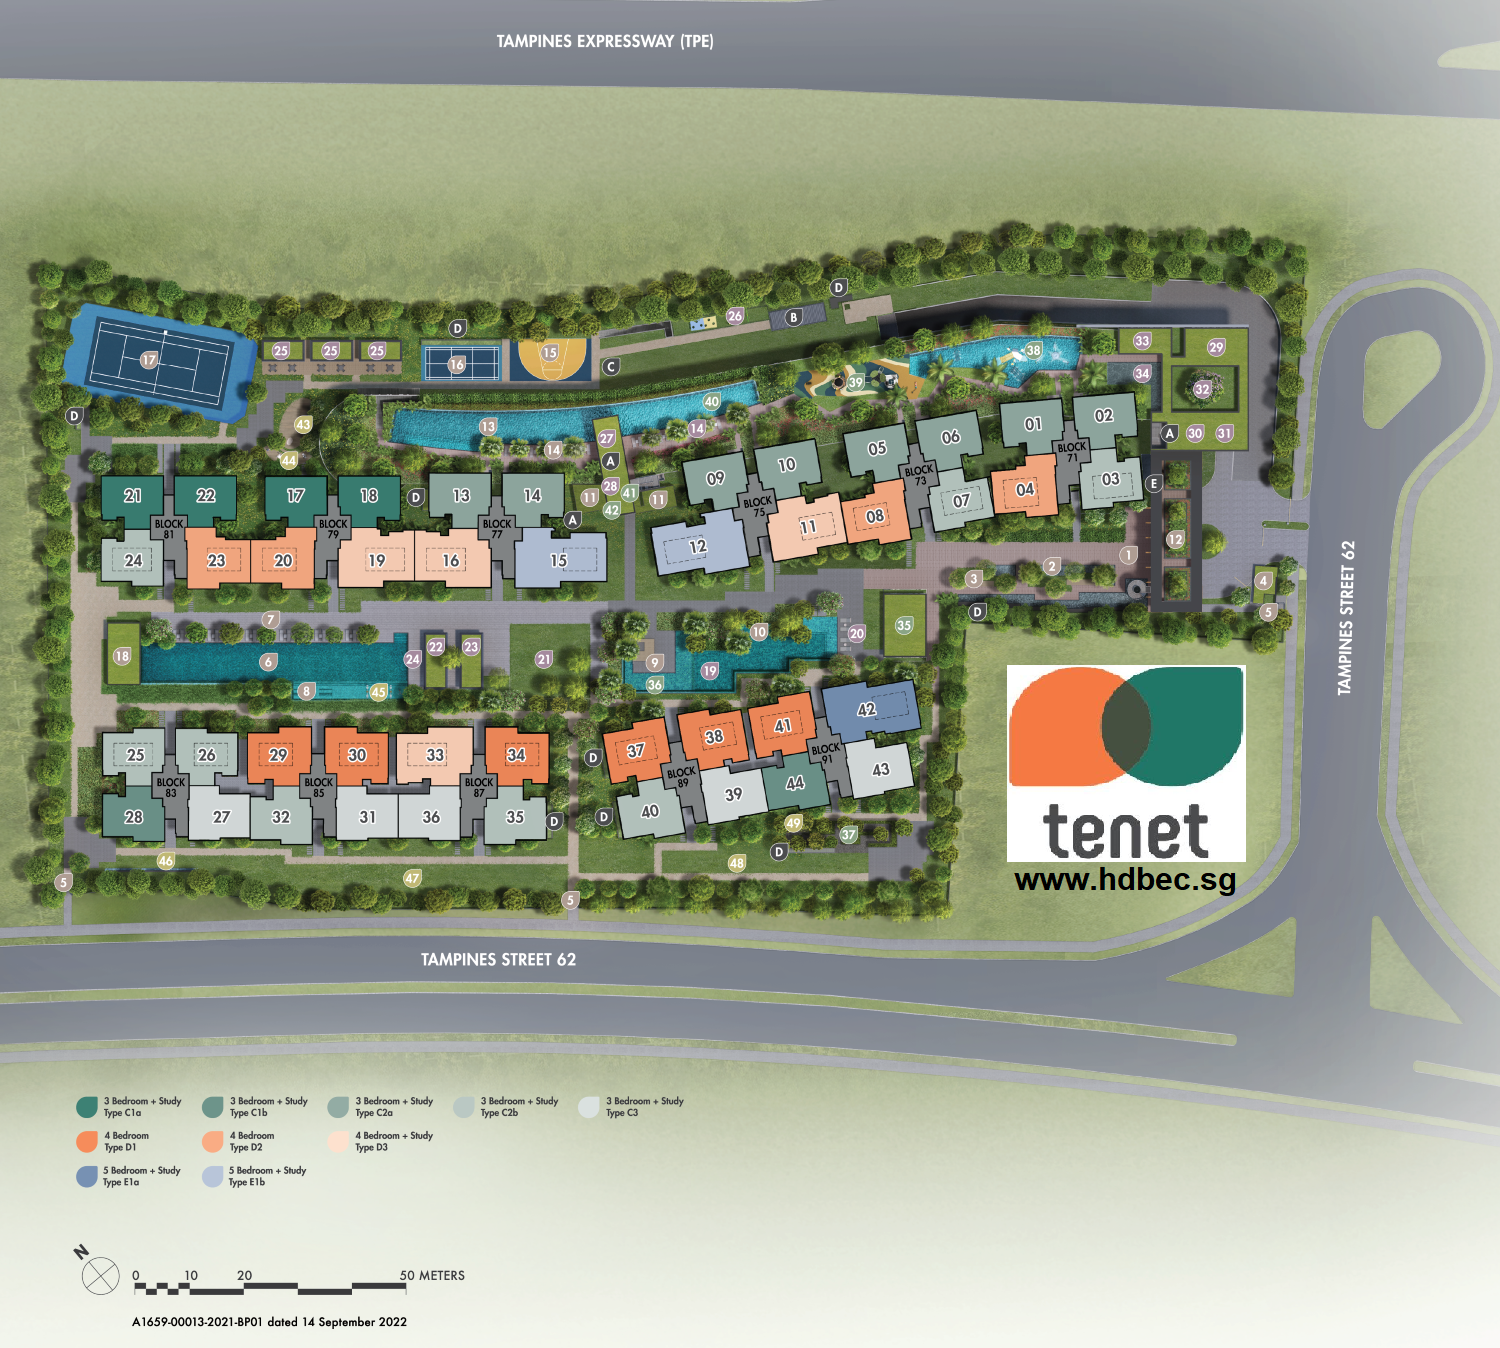 Tenet EC @ Tampines St 62 Site Plan & Facilities